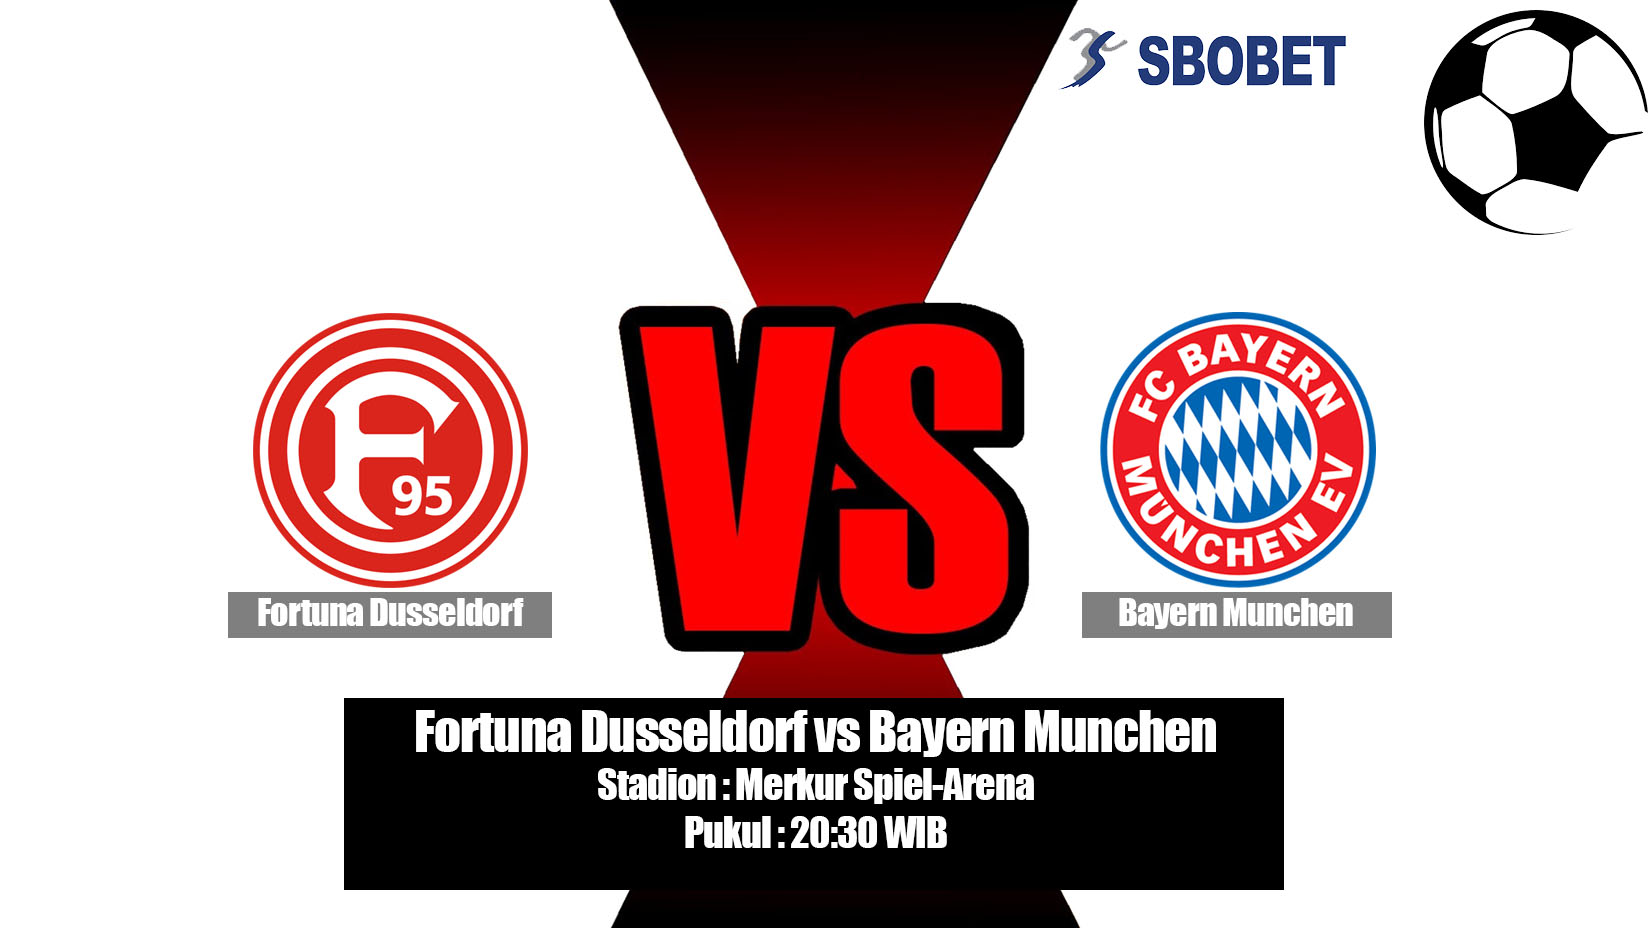 Prediksi Bola Fortuna Dusseldorf vs Bayern Munchen 14 April 2019